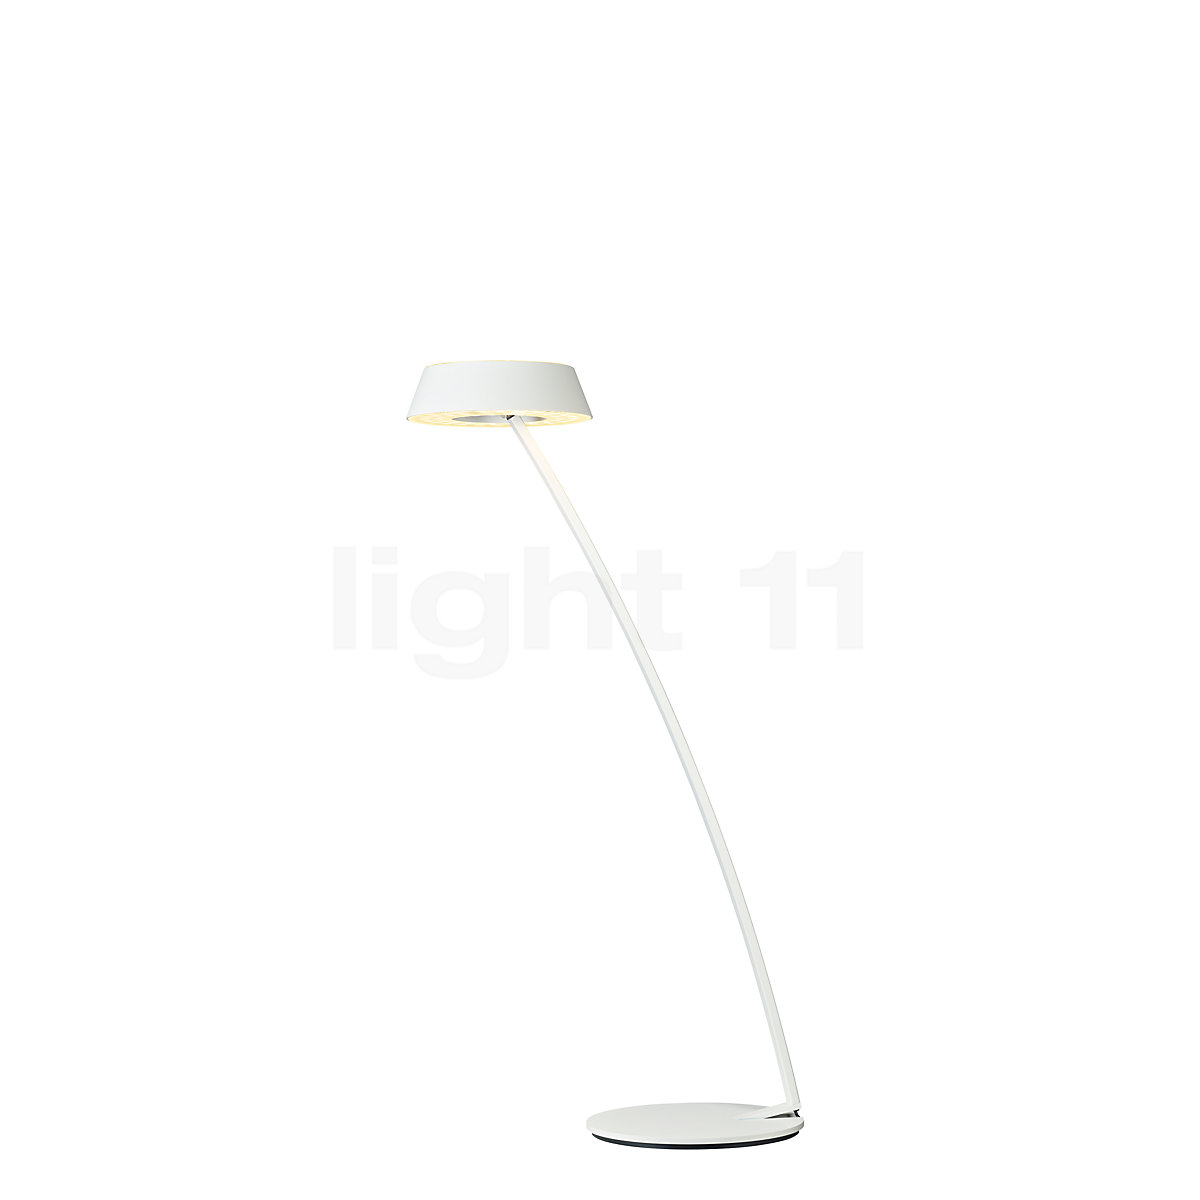 Oligo Glance Table Lamp Led Curved, Curved Table Lamp